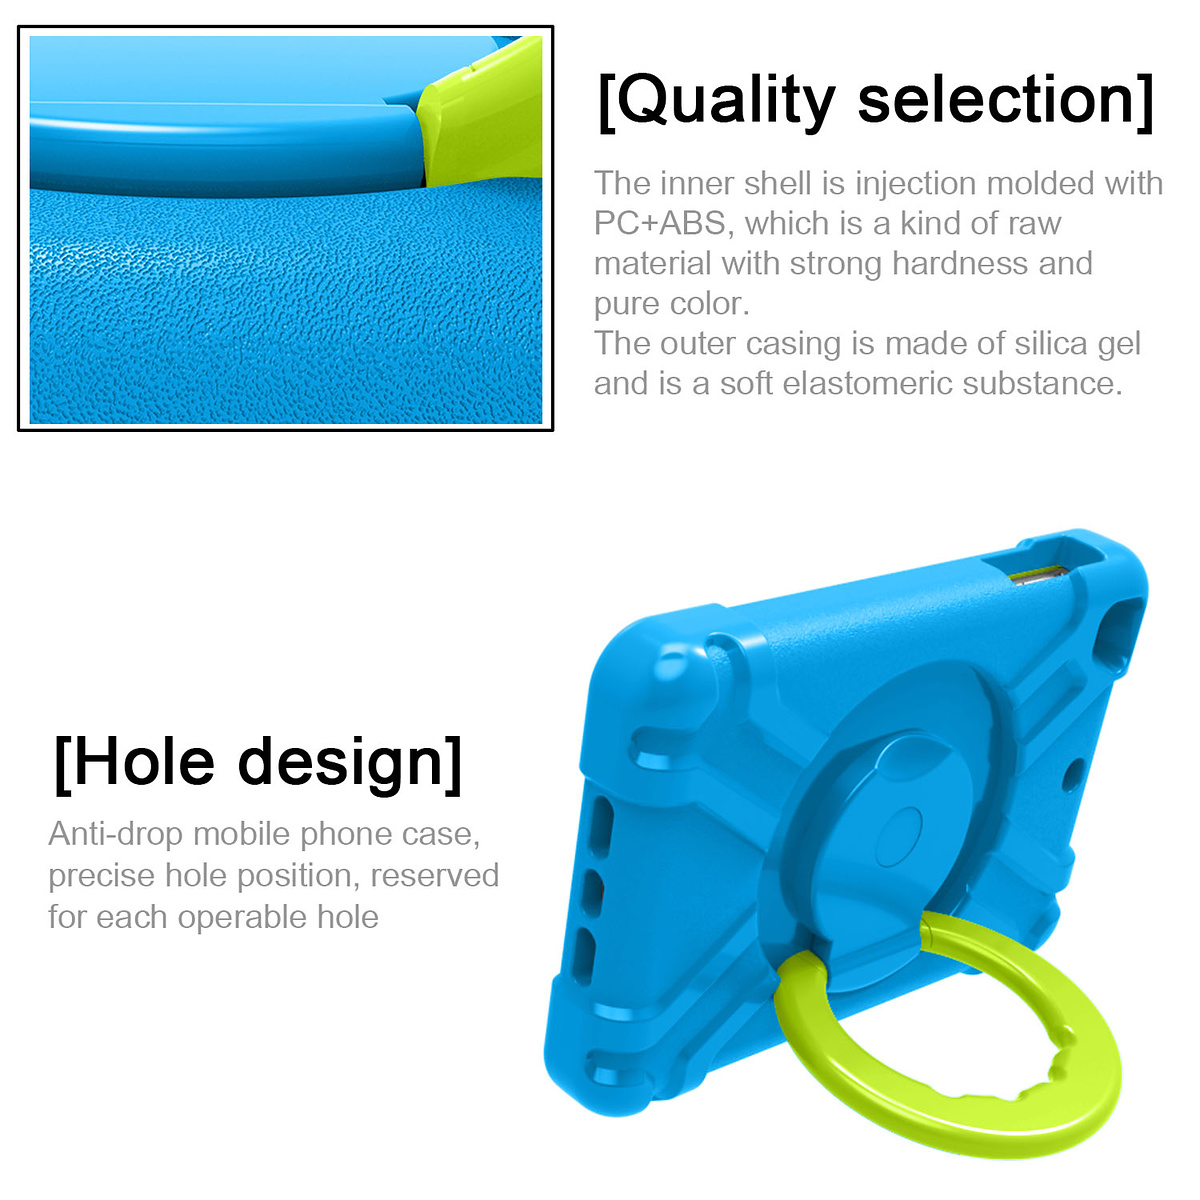 Barnfodral med roterbart ställ, iPad Mini 1/2/3, blå/grön